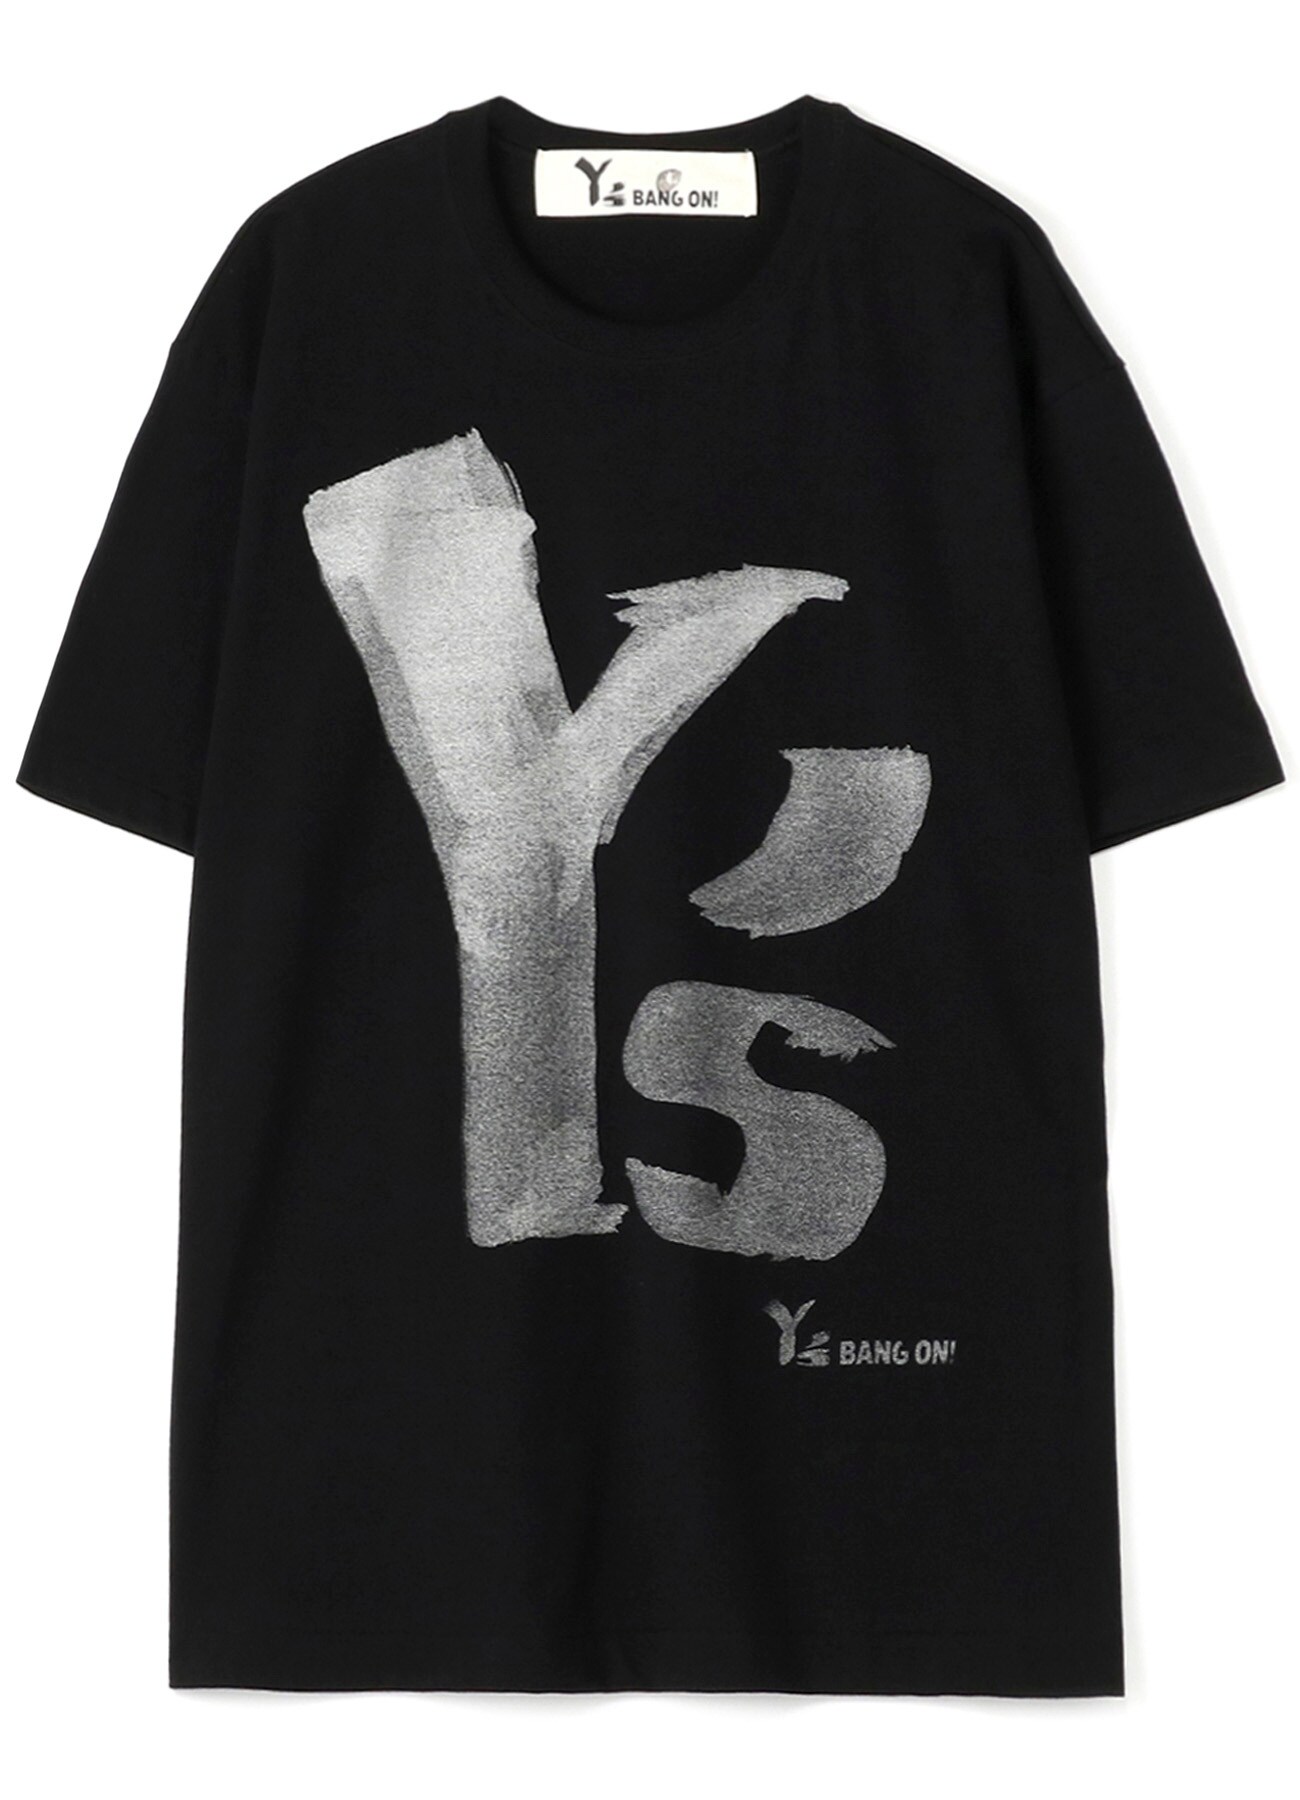 Y's BANG ON!デカロゴTシャツ シルバー半袖